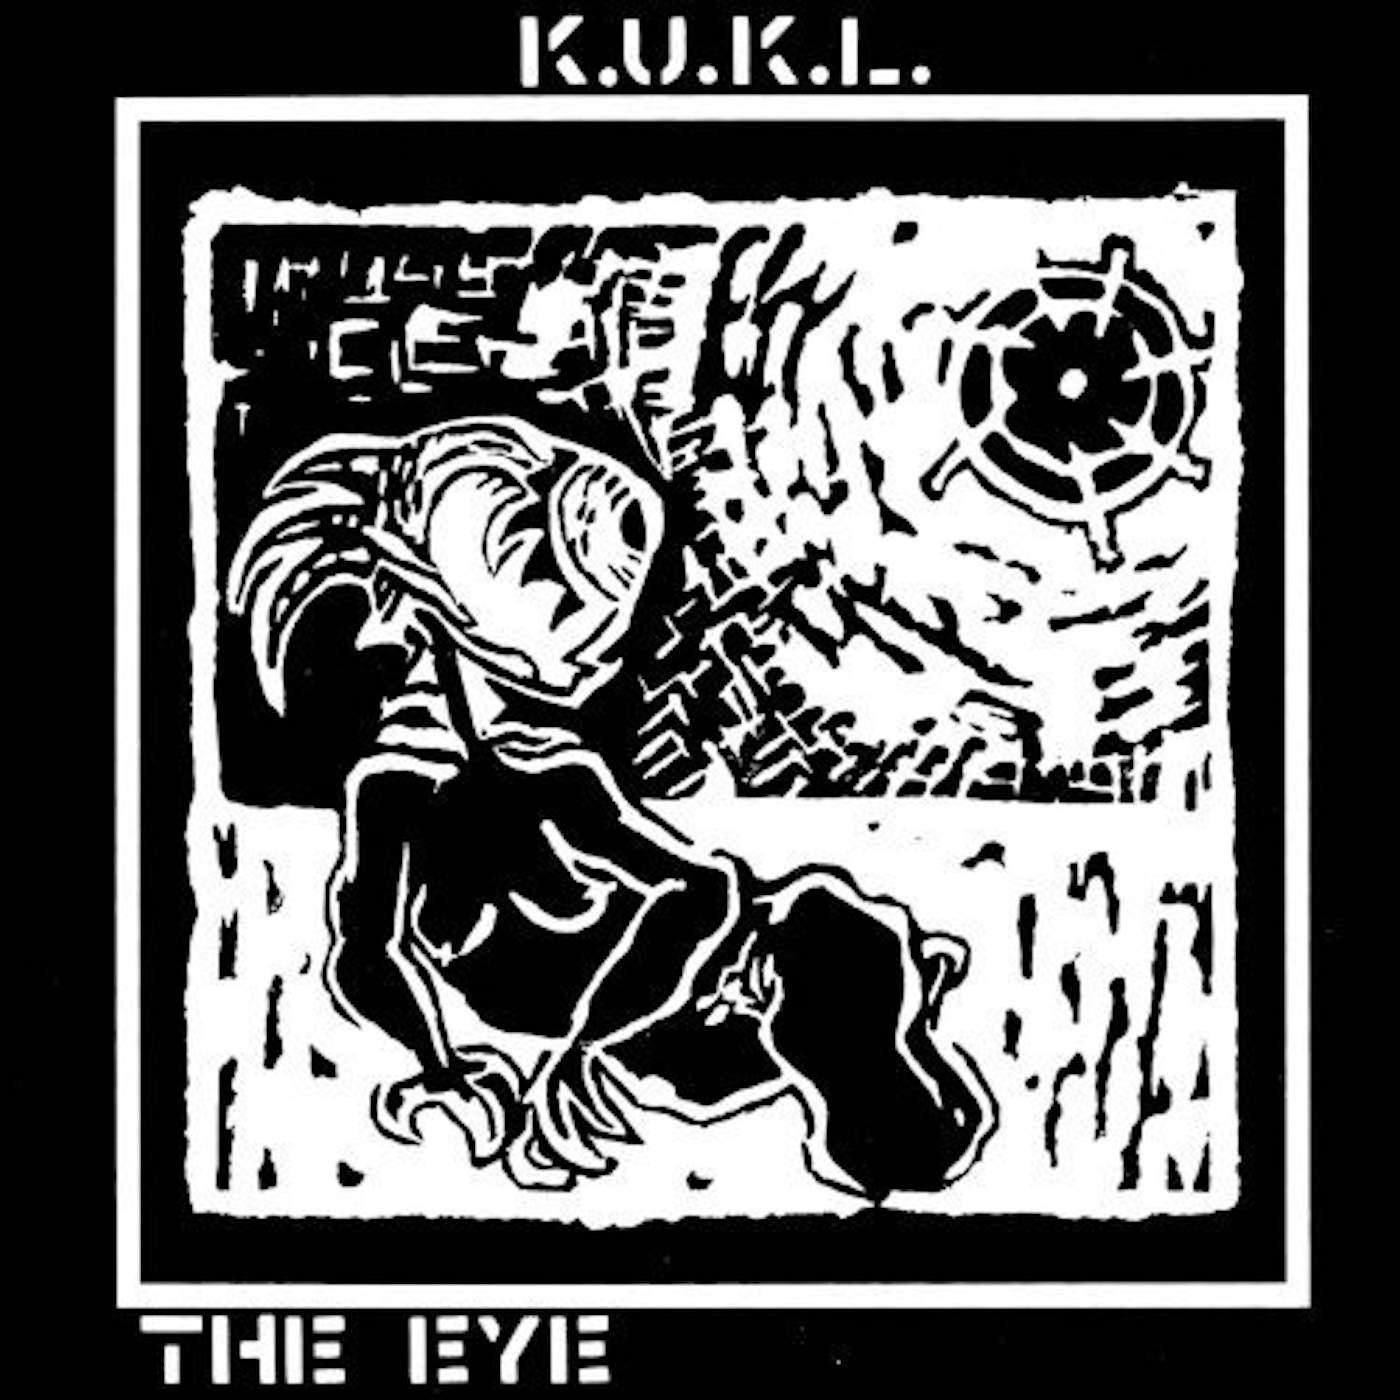 K.U.K.L. EYE-DIRECT METAL MASTERS Vinyl Record